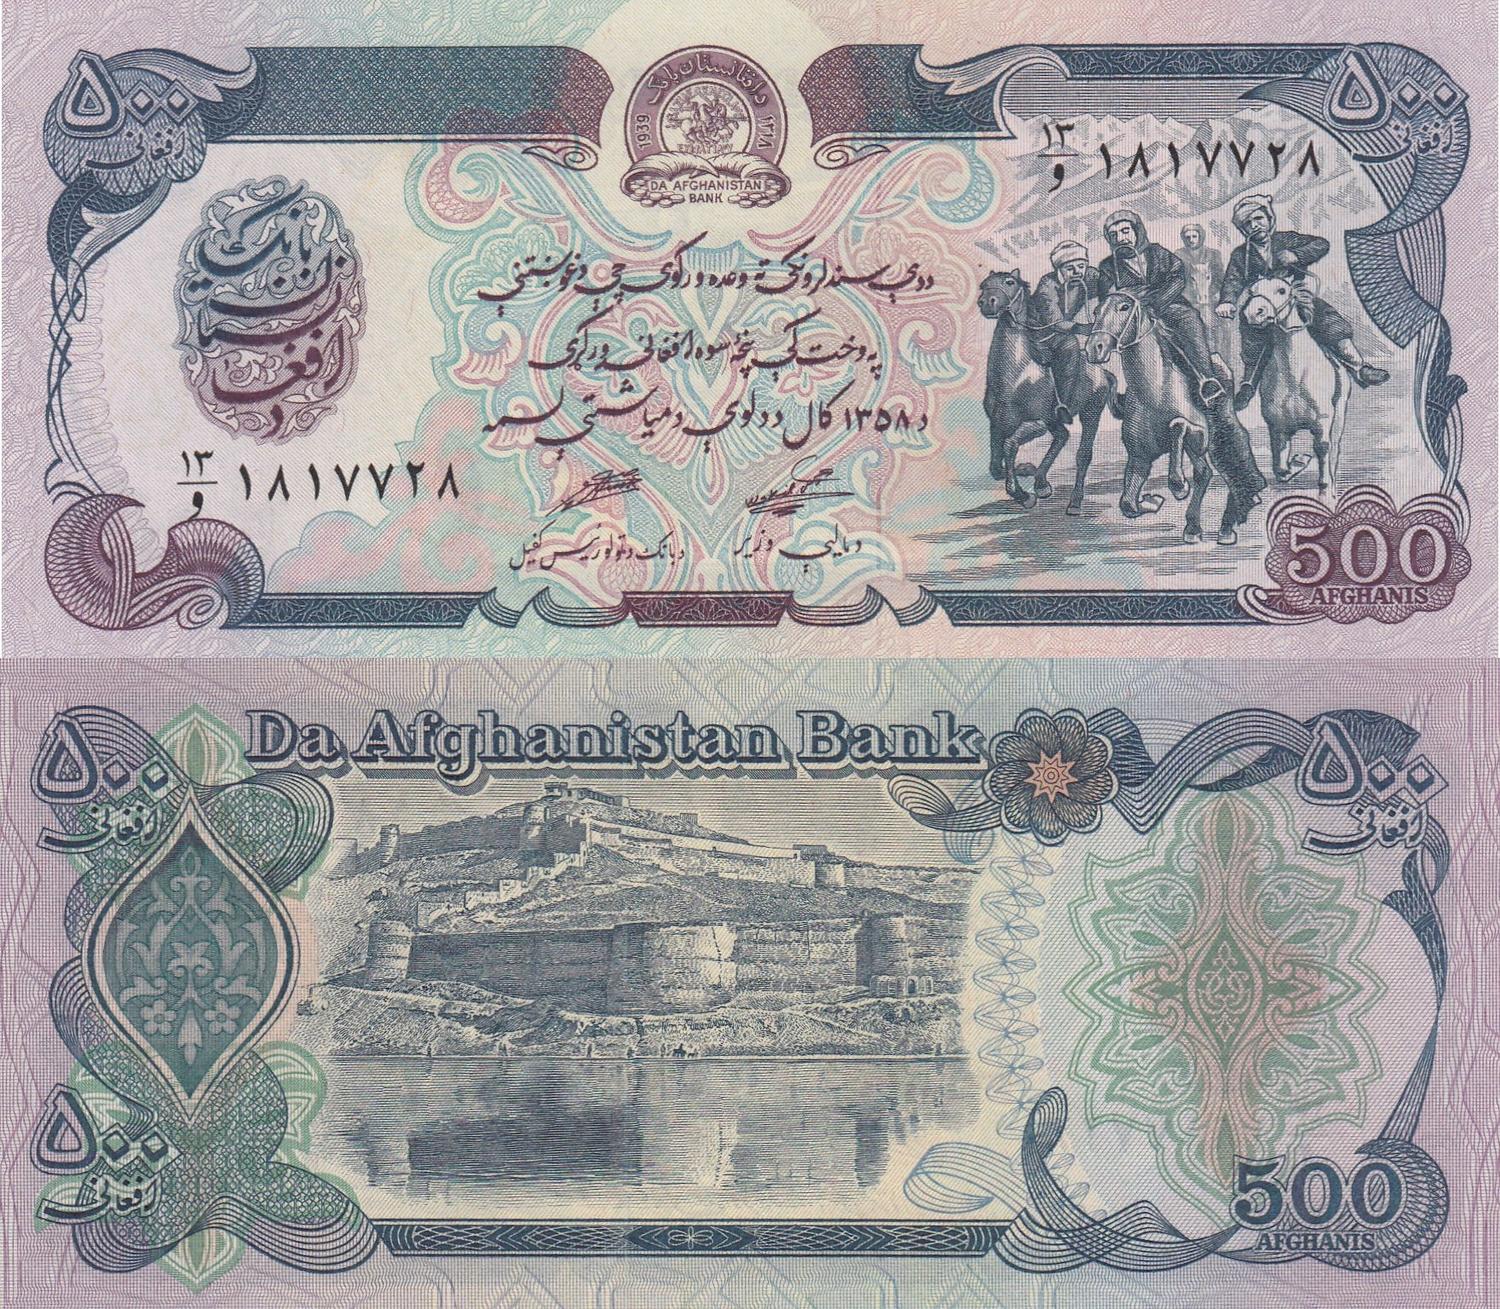 THAILAND 10 Baht 1980 P87 Sign 66 King Rama IX UNC Banknote